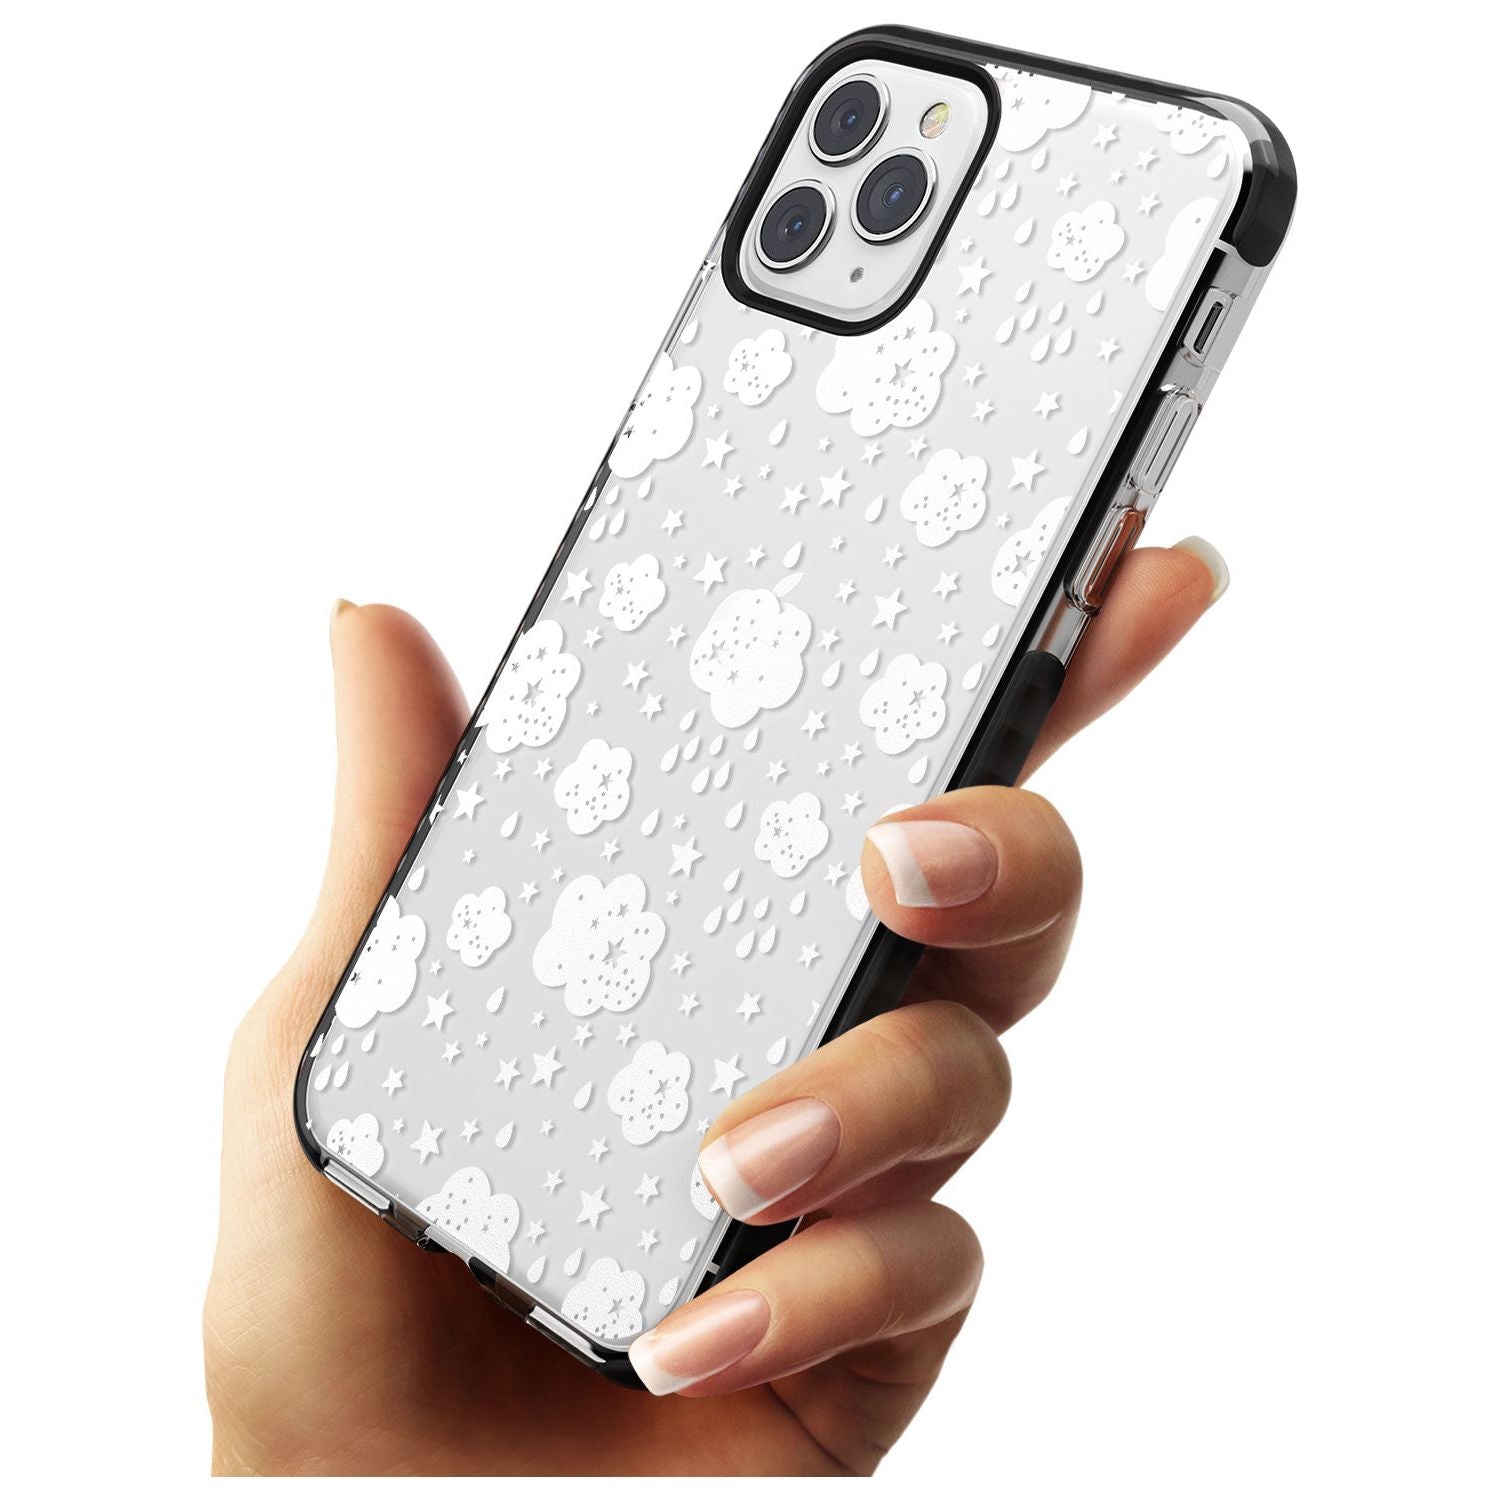 Rainy Days Black Impact Phone Case for iPhone 11 Pro Max